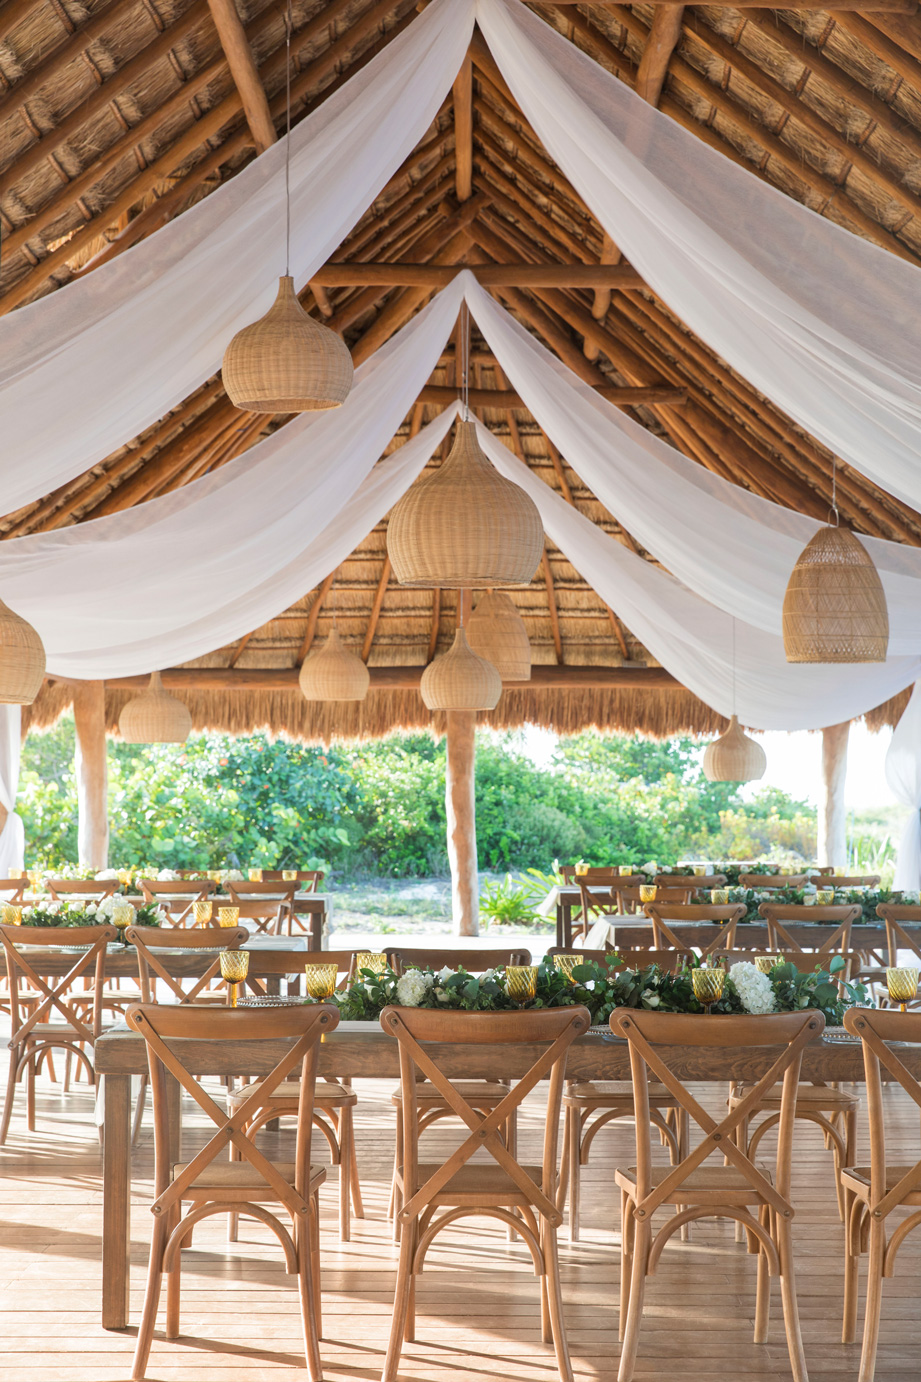 Romantic wedding venues in Cancun Mexico